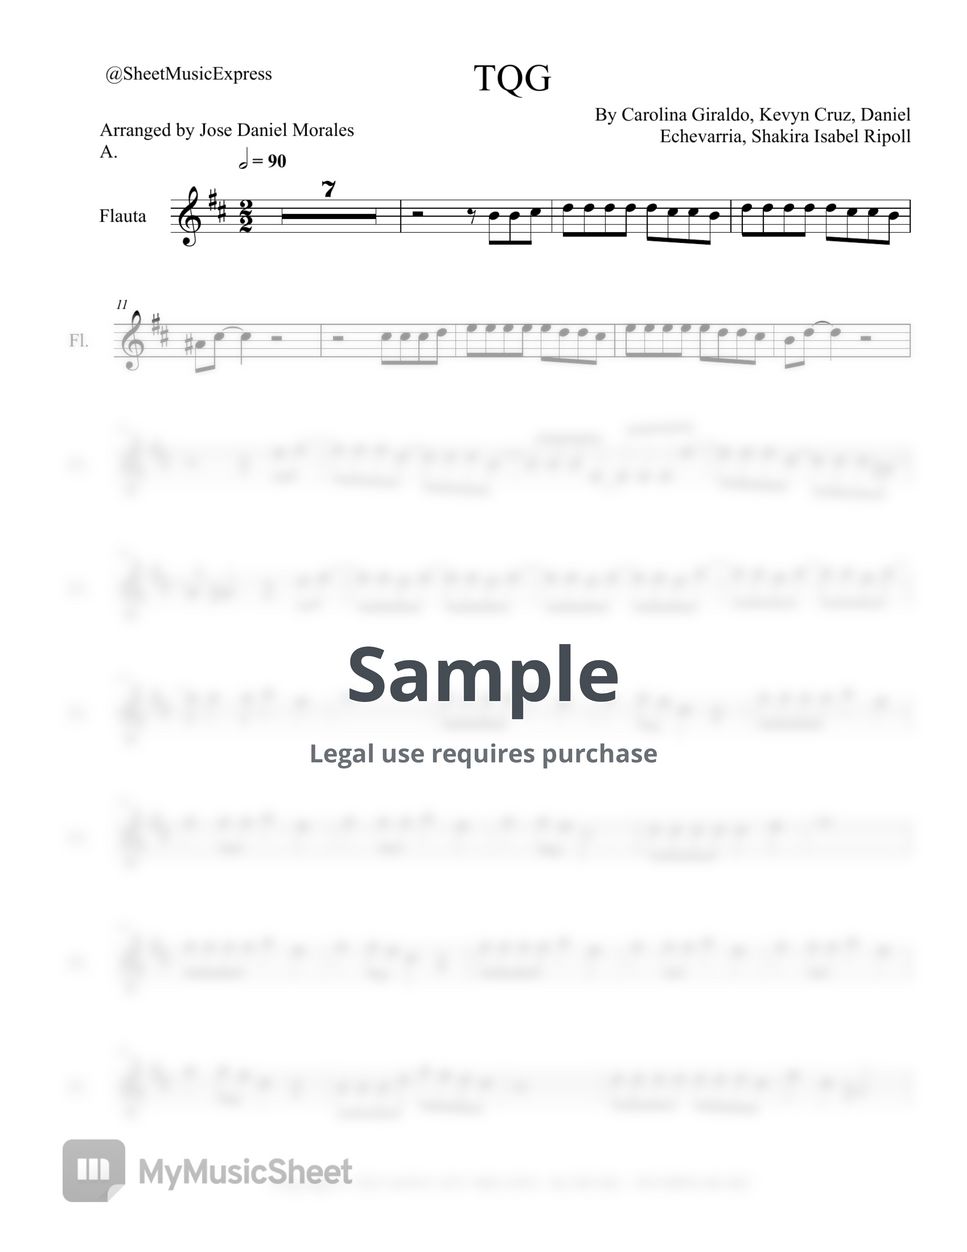 Karol G - TQG flute (Latin) by Sheet Music Express